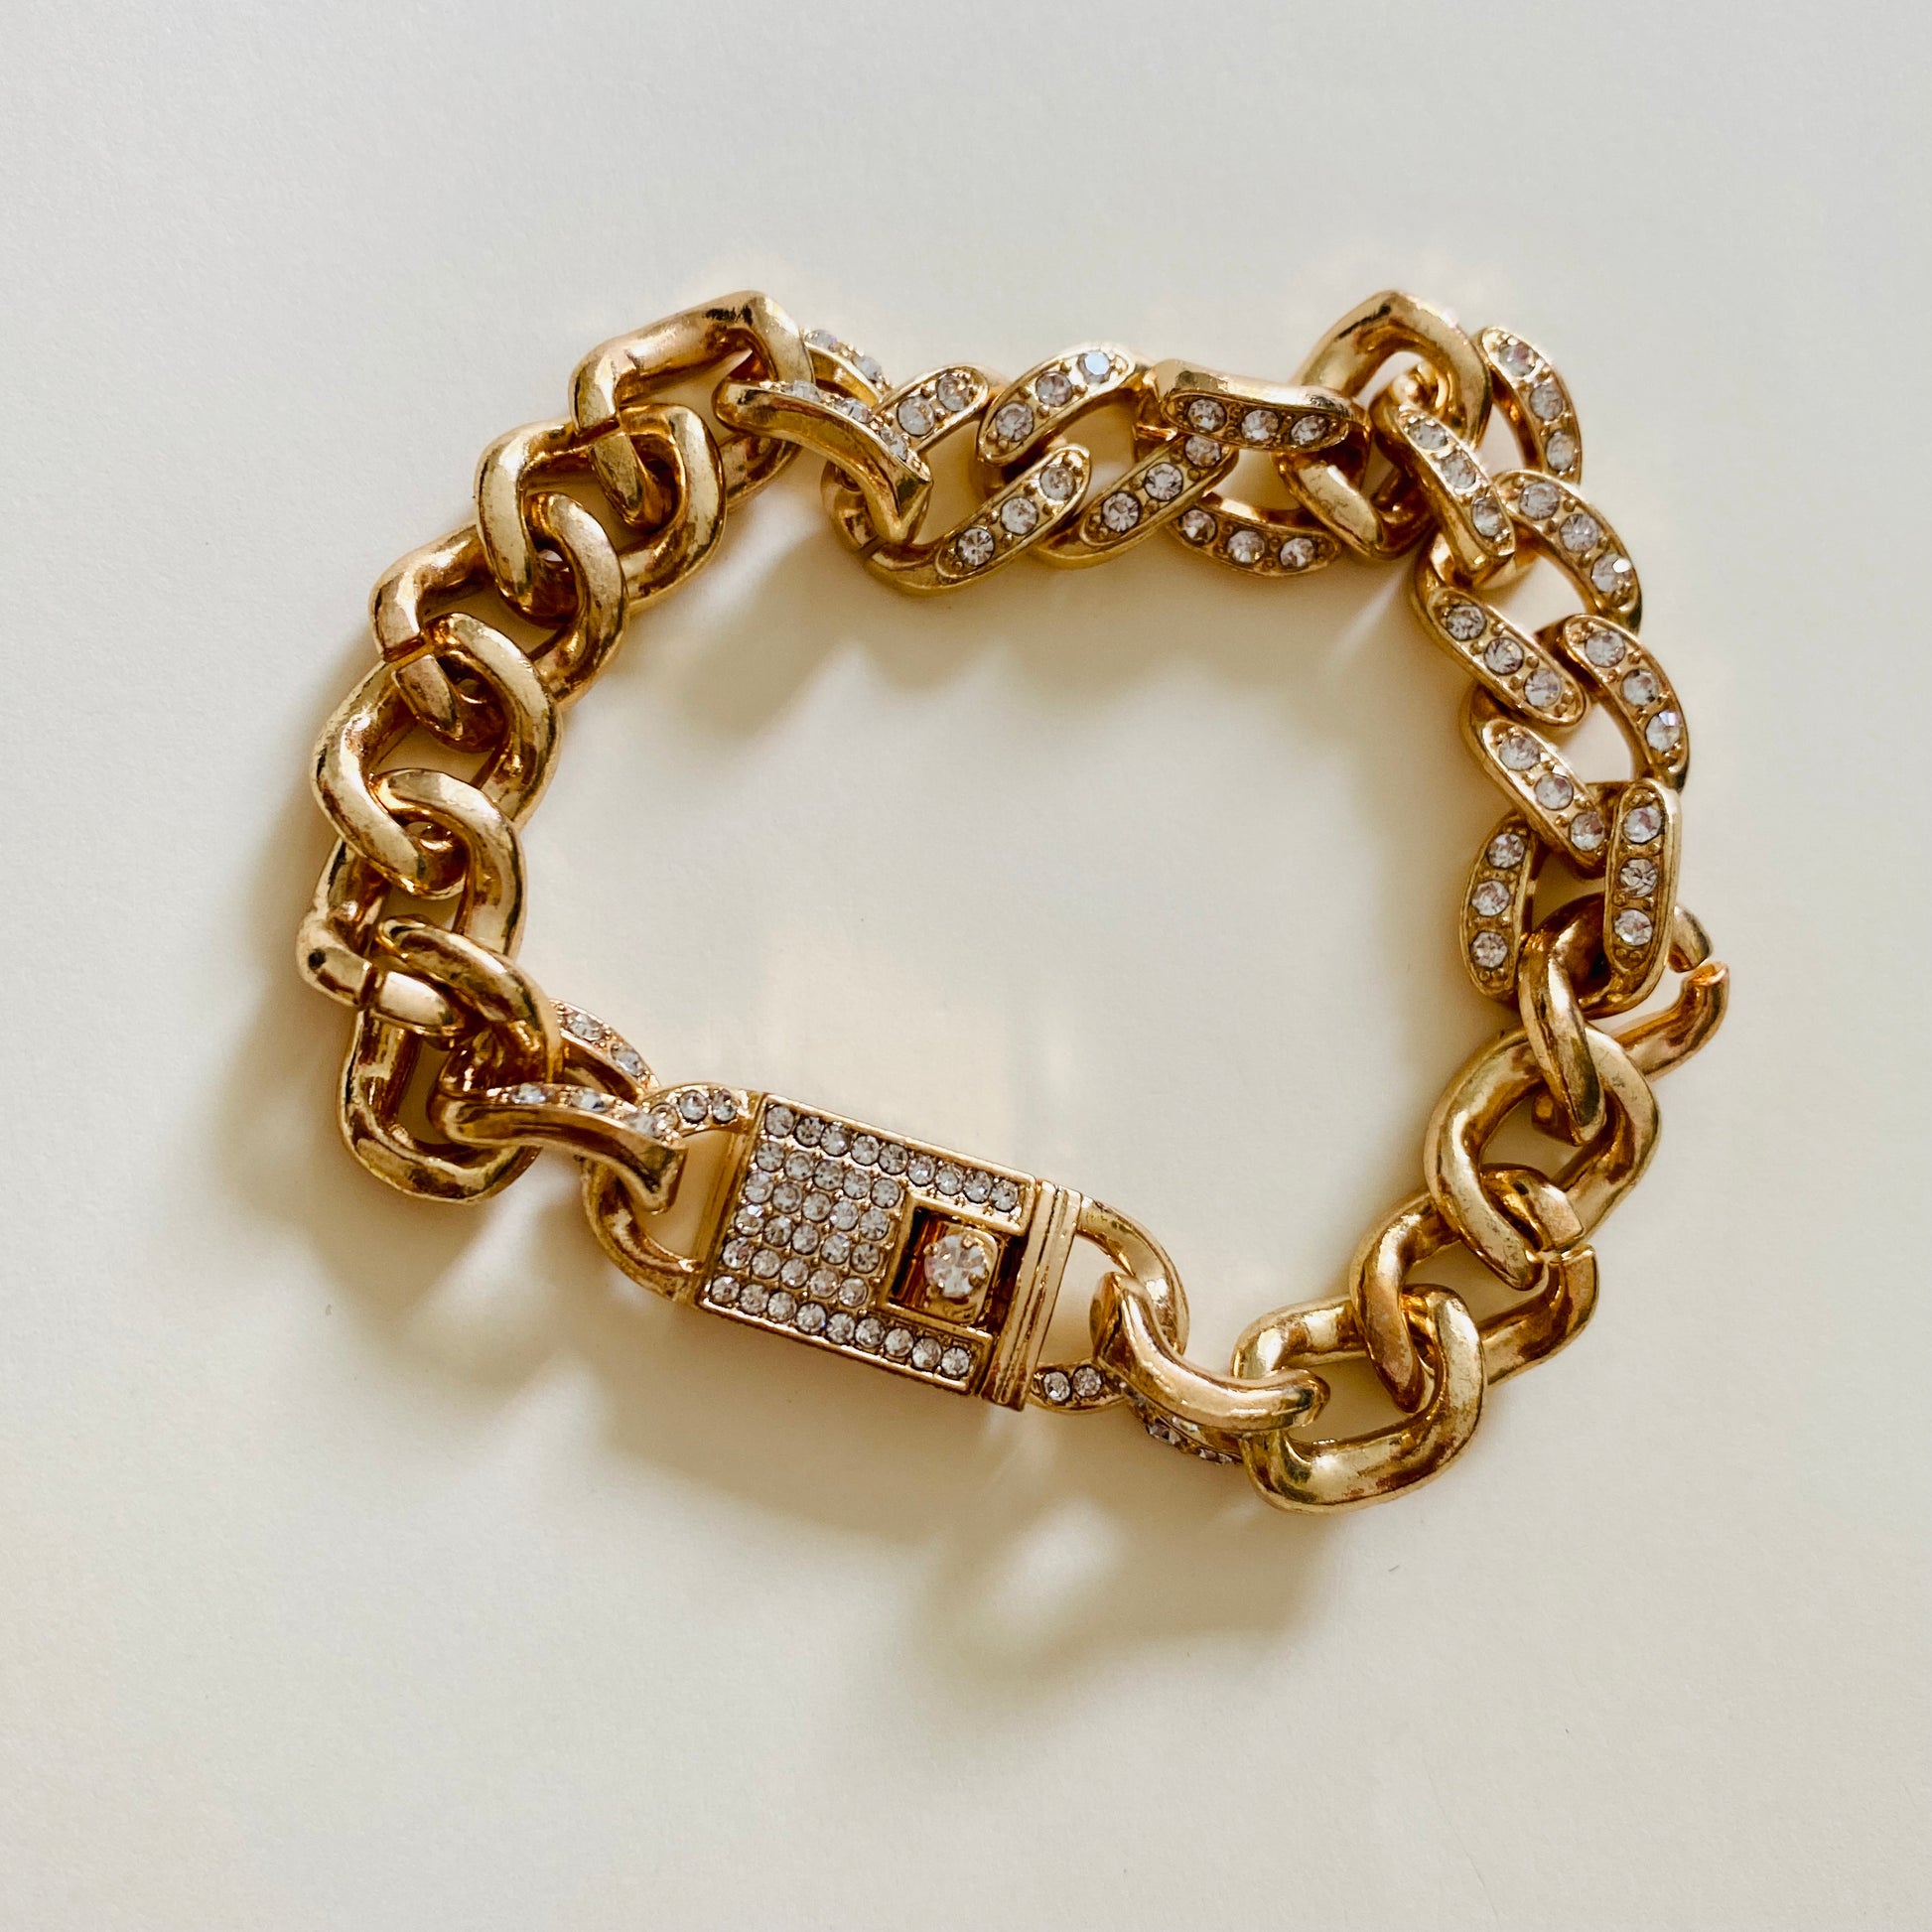 The bohemian chunky bracelet